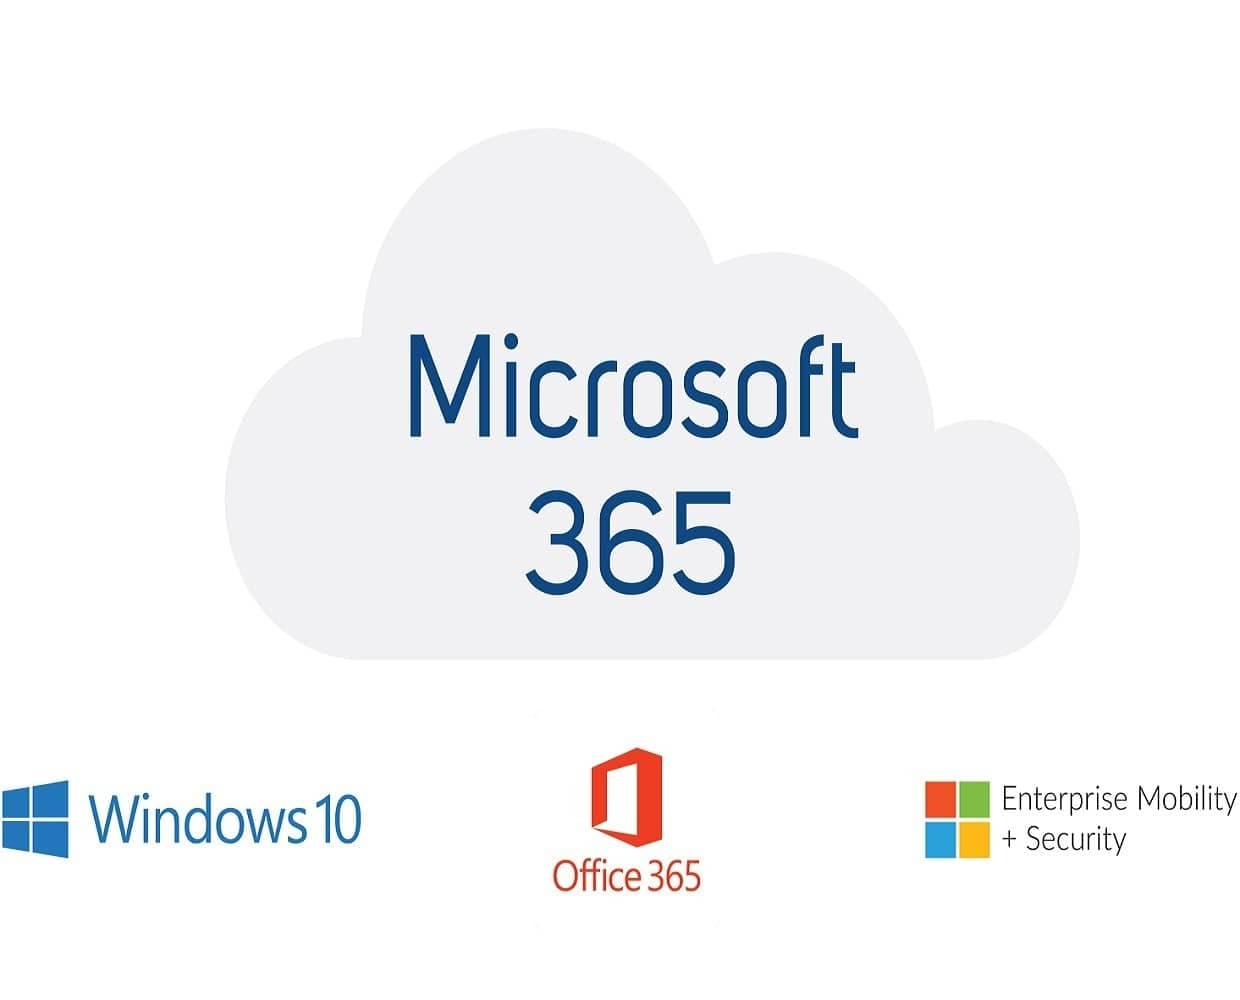 MS-900: Microsoft 365 Fundamentals IT Certification Training Course ...